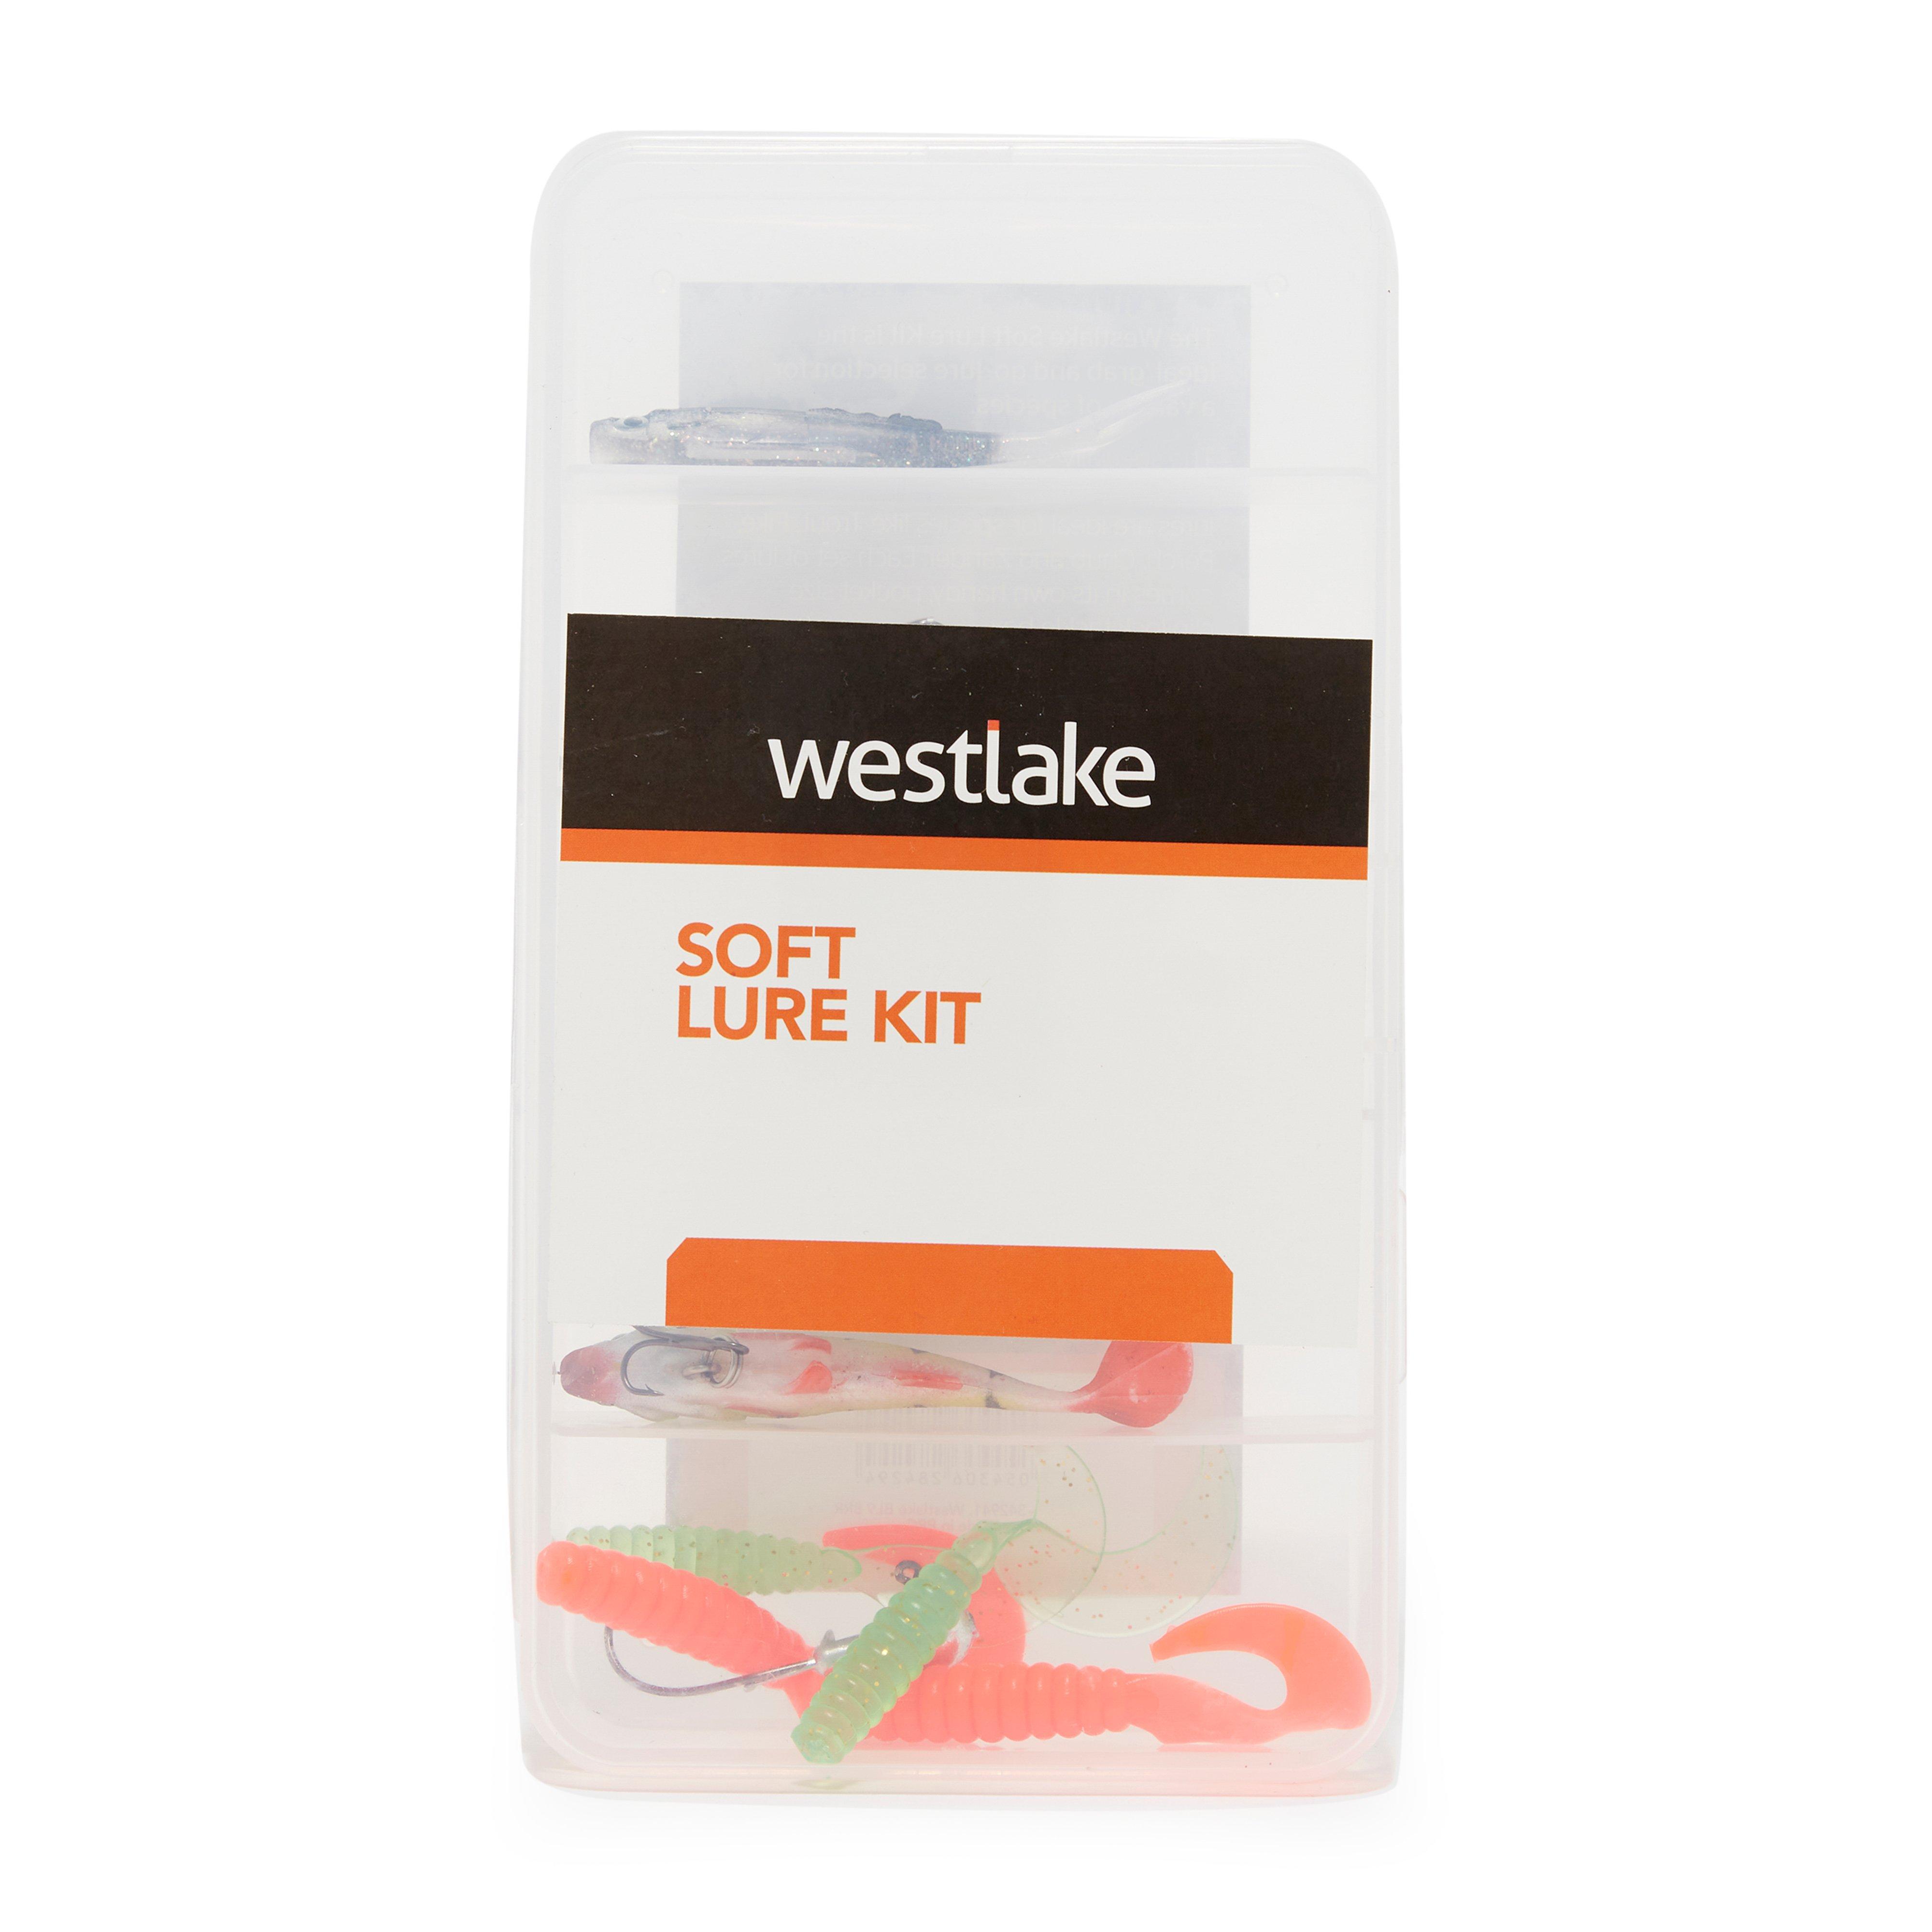 Westlake Wedge Lure Kit - Multi/lure  Multi/lure